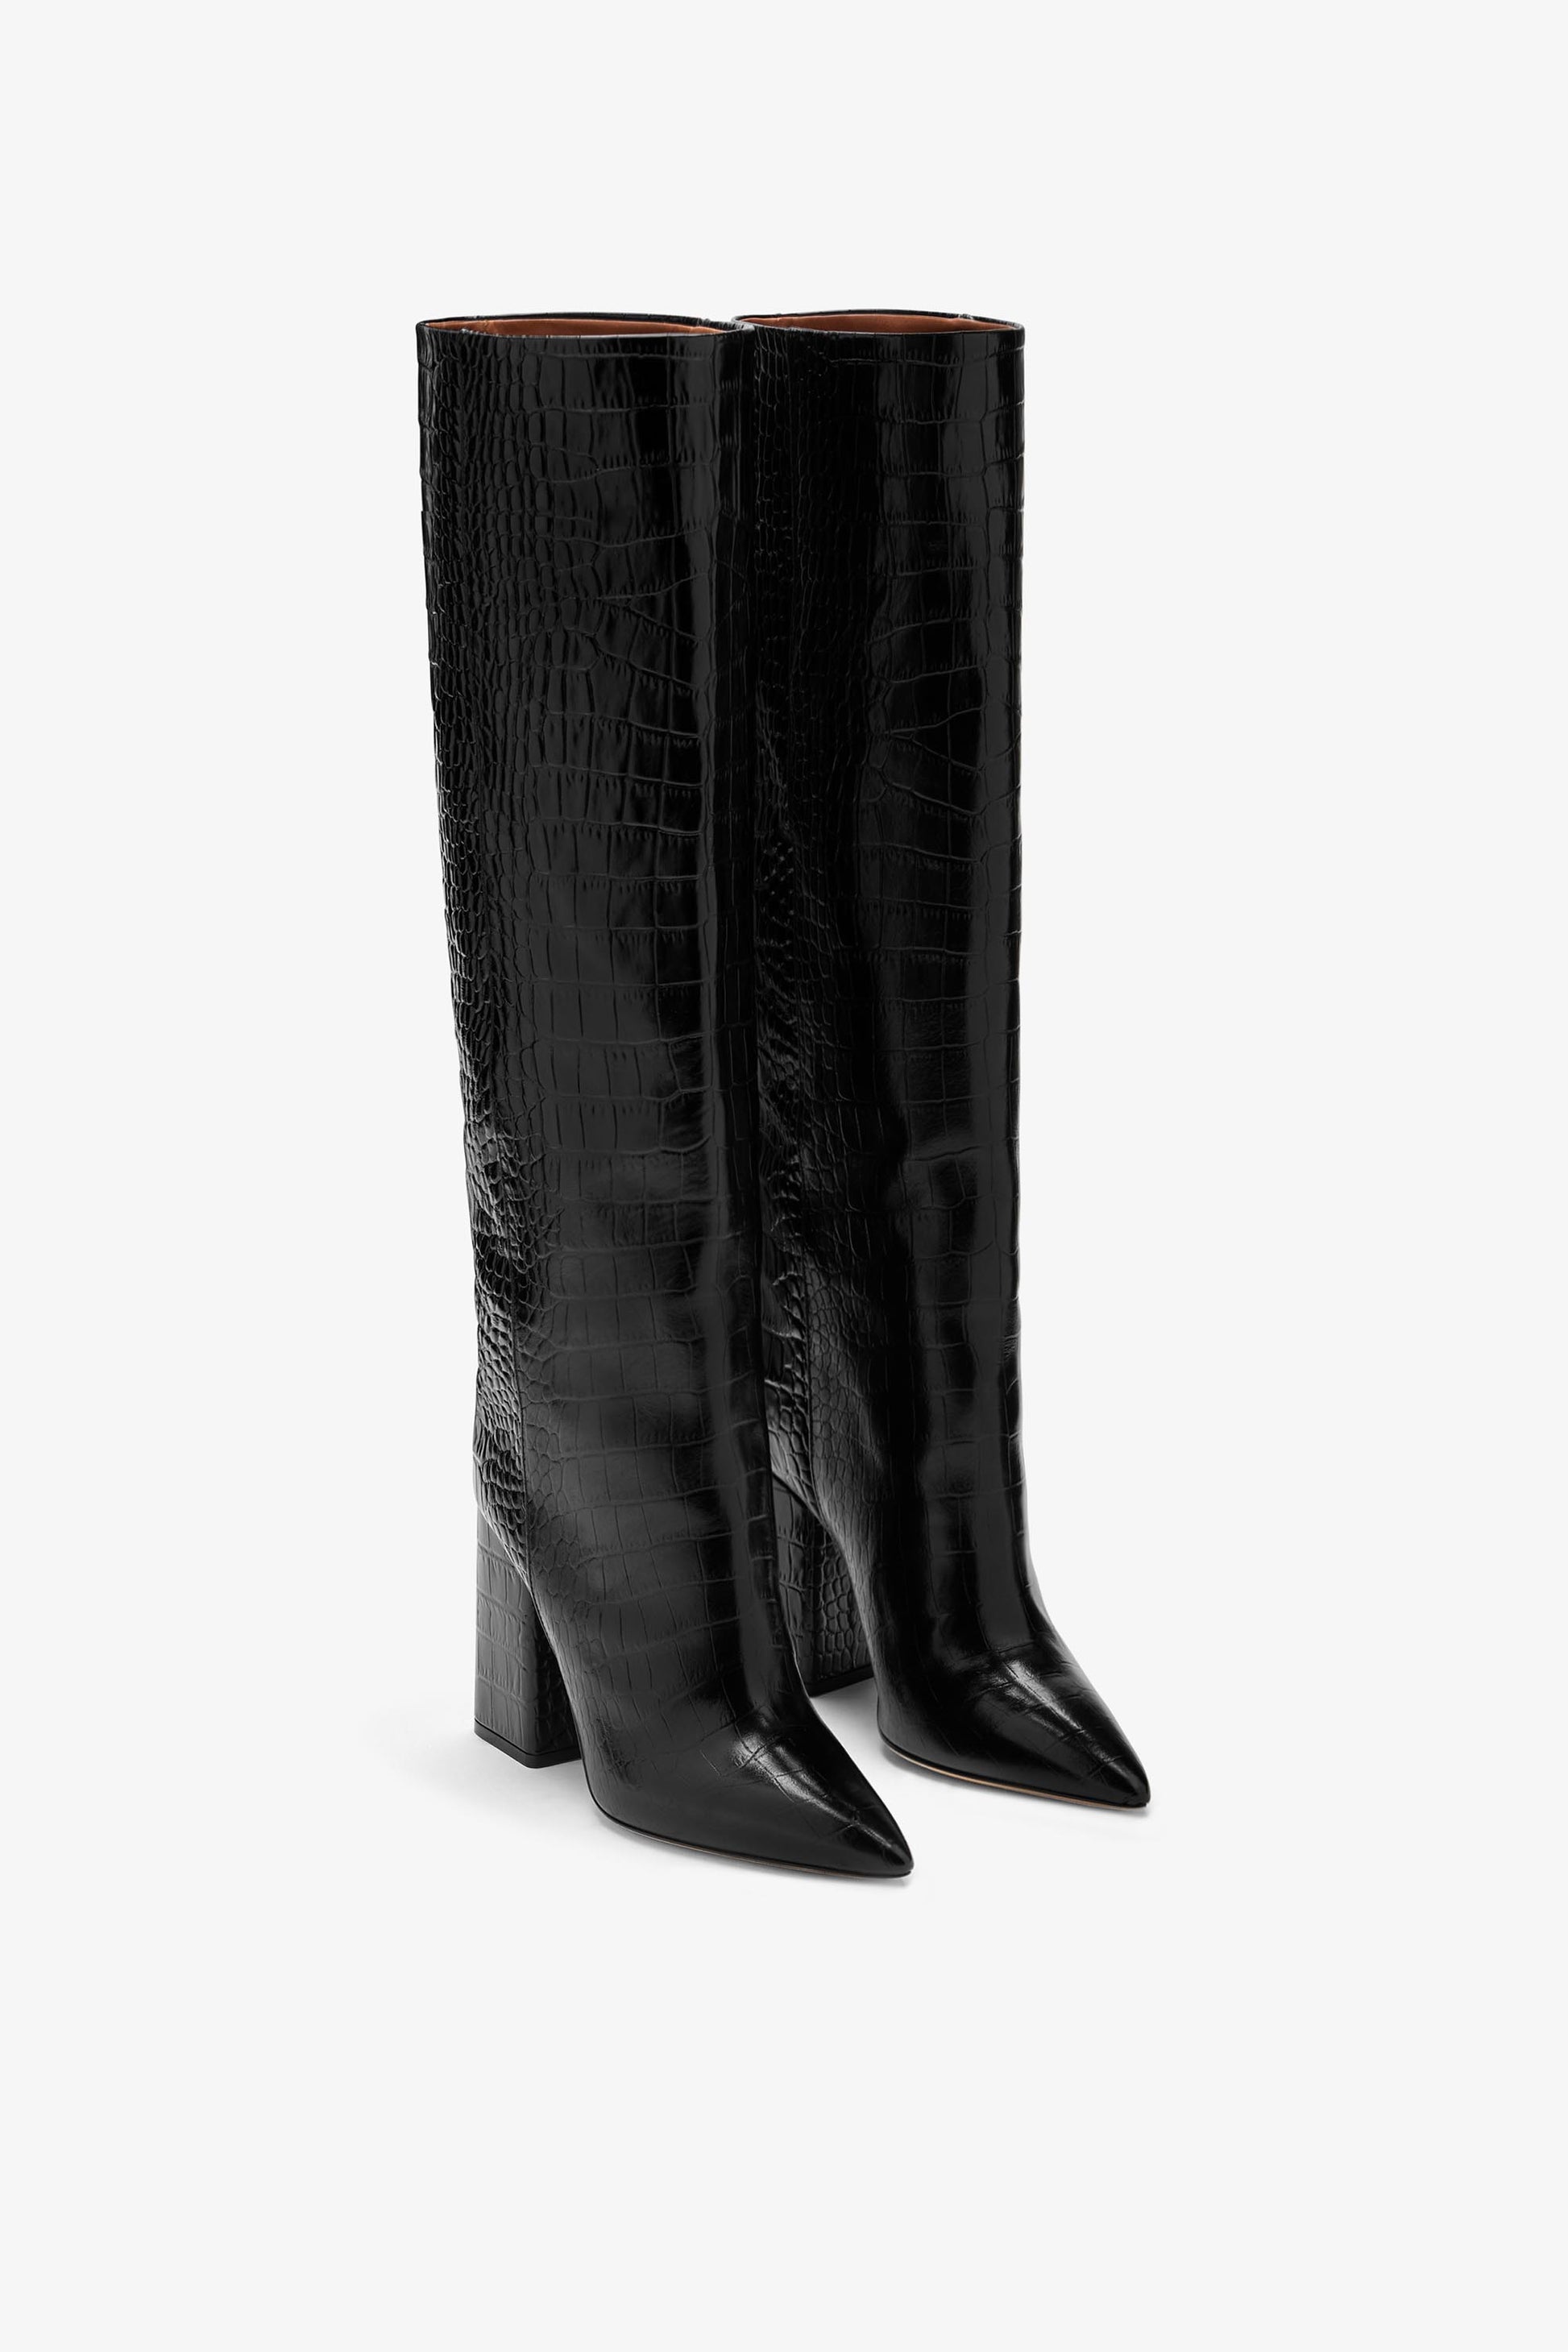 Black croc-effect leather boots